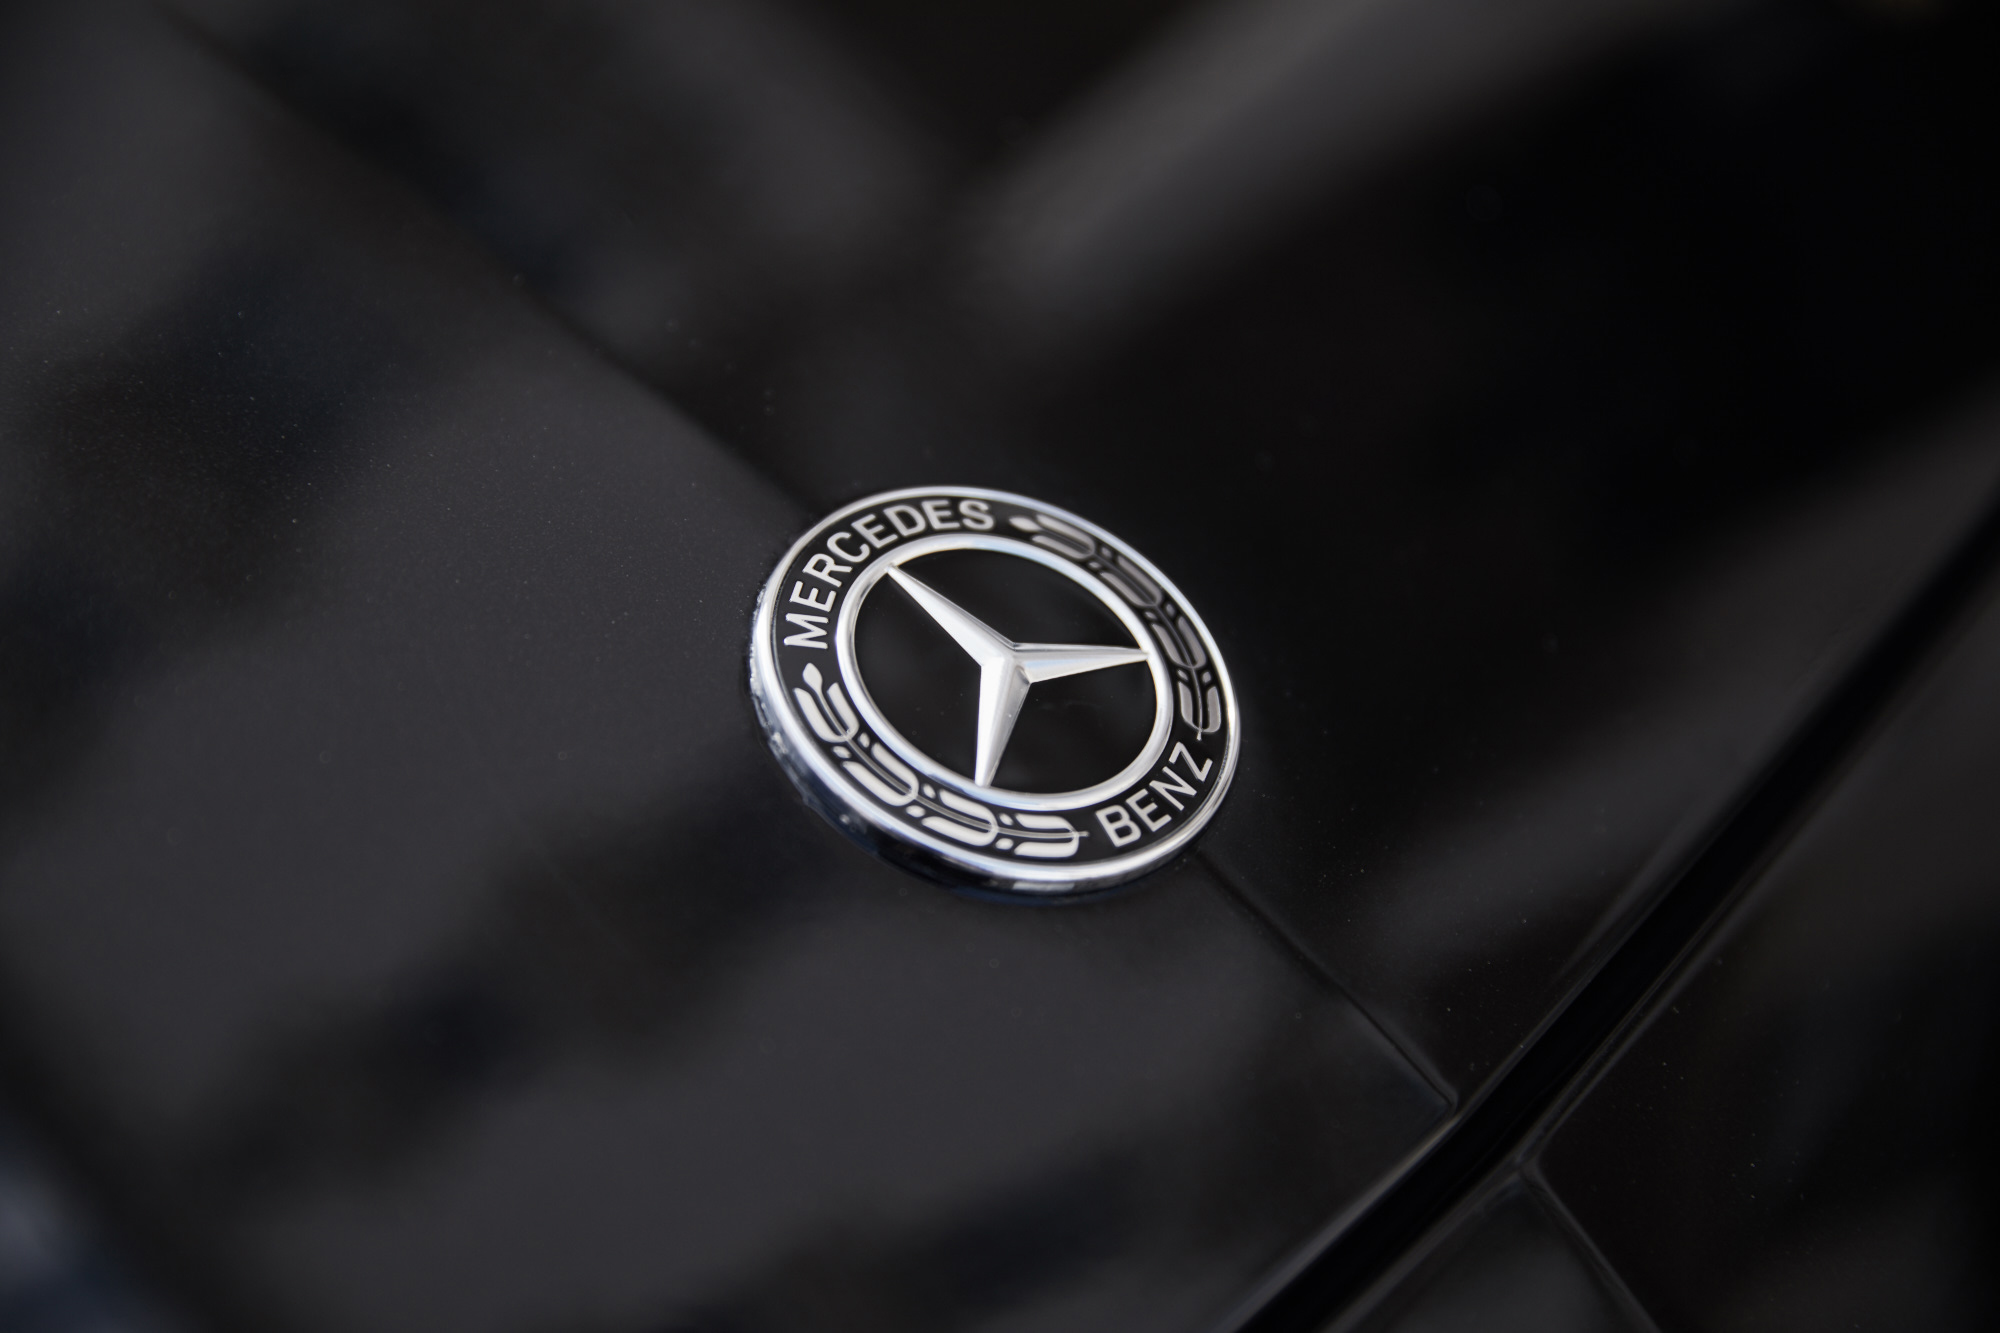 Mercedes Benz Car and Logo